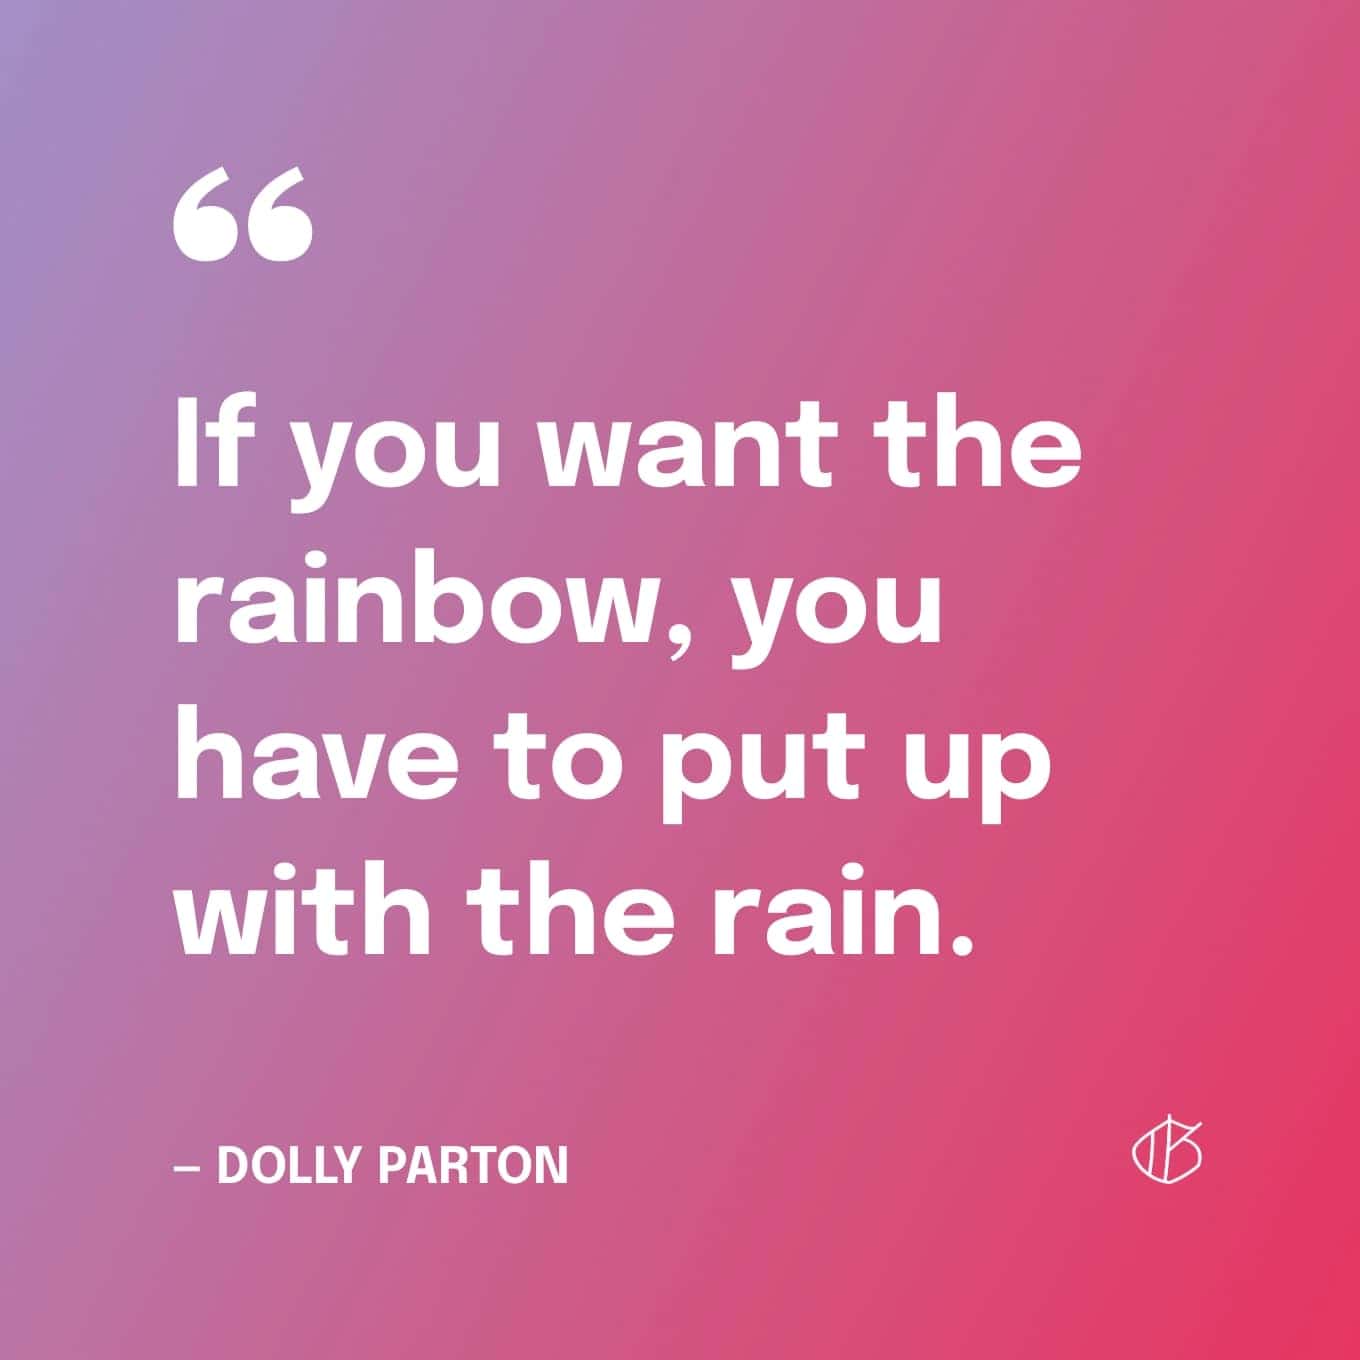 Dolly Parton Quote Wallpaper: 